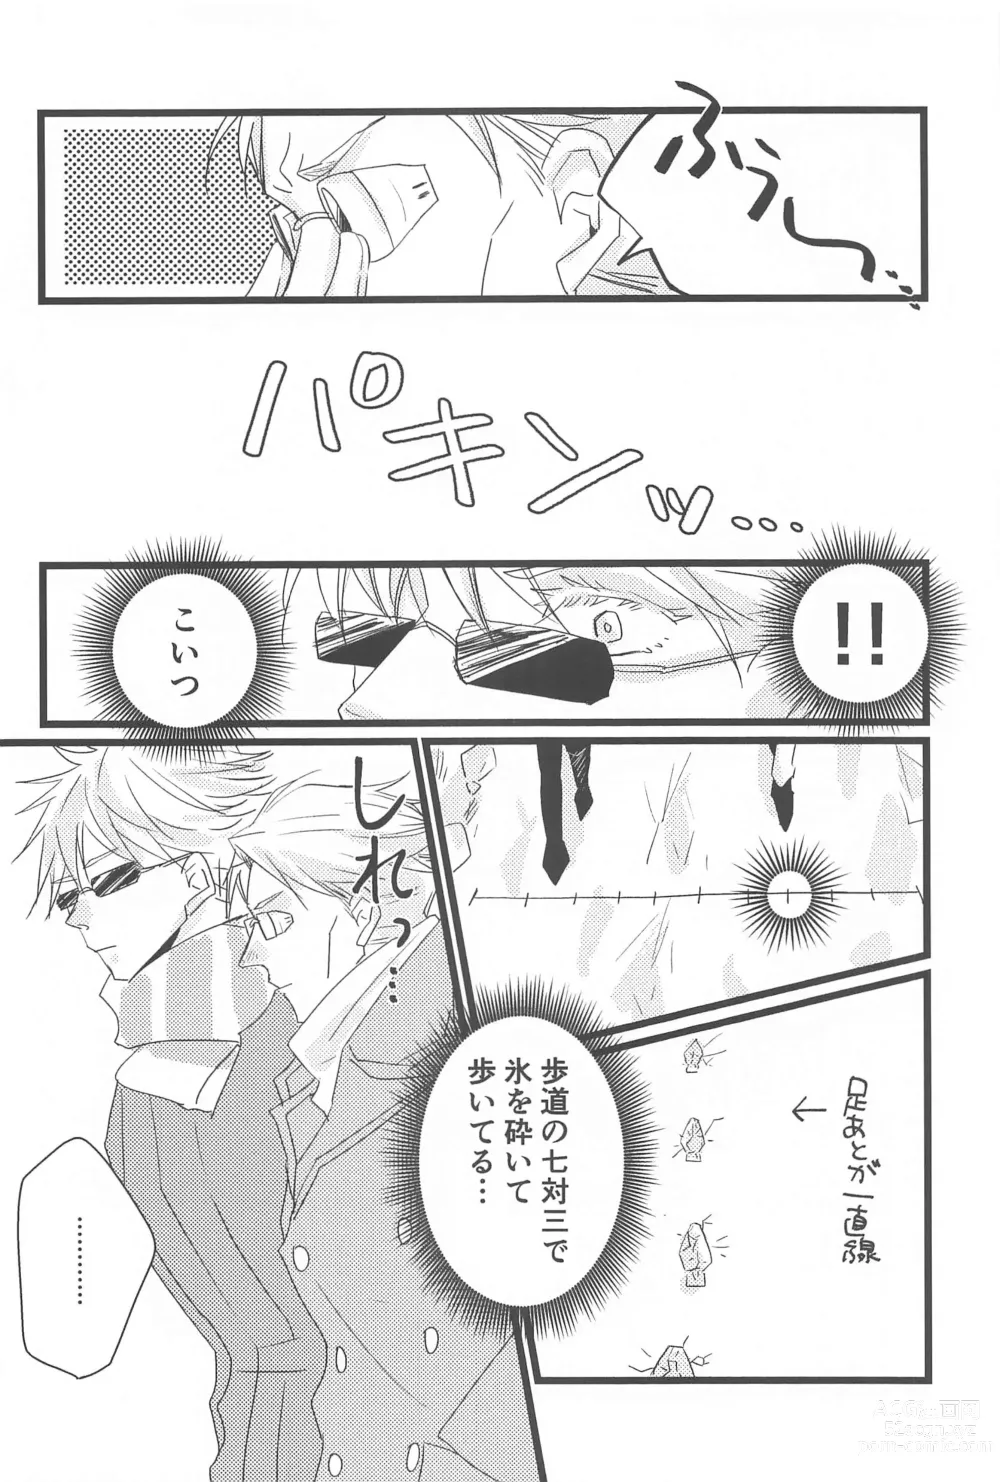 Page 7 of doujinshi timeless memory 2